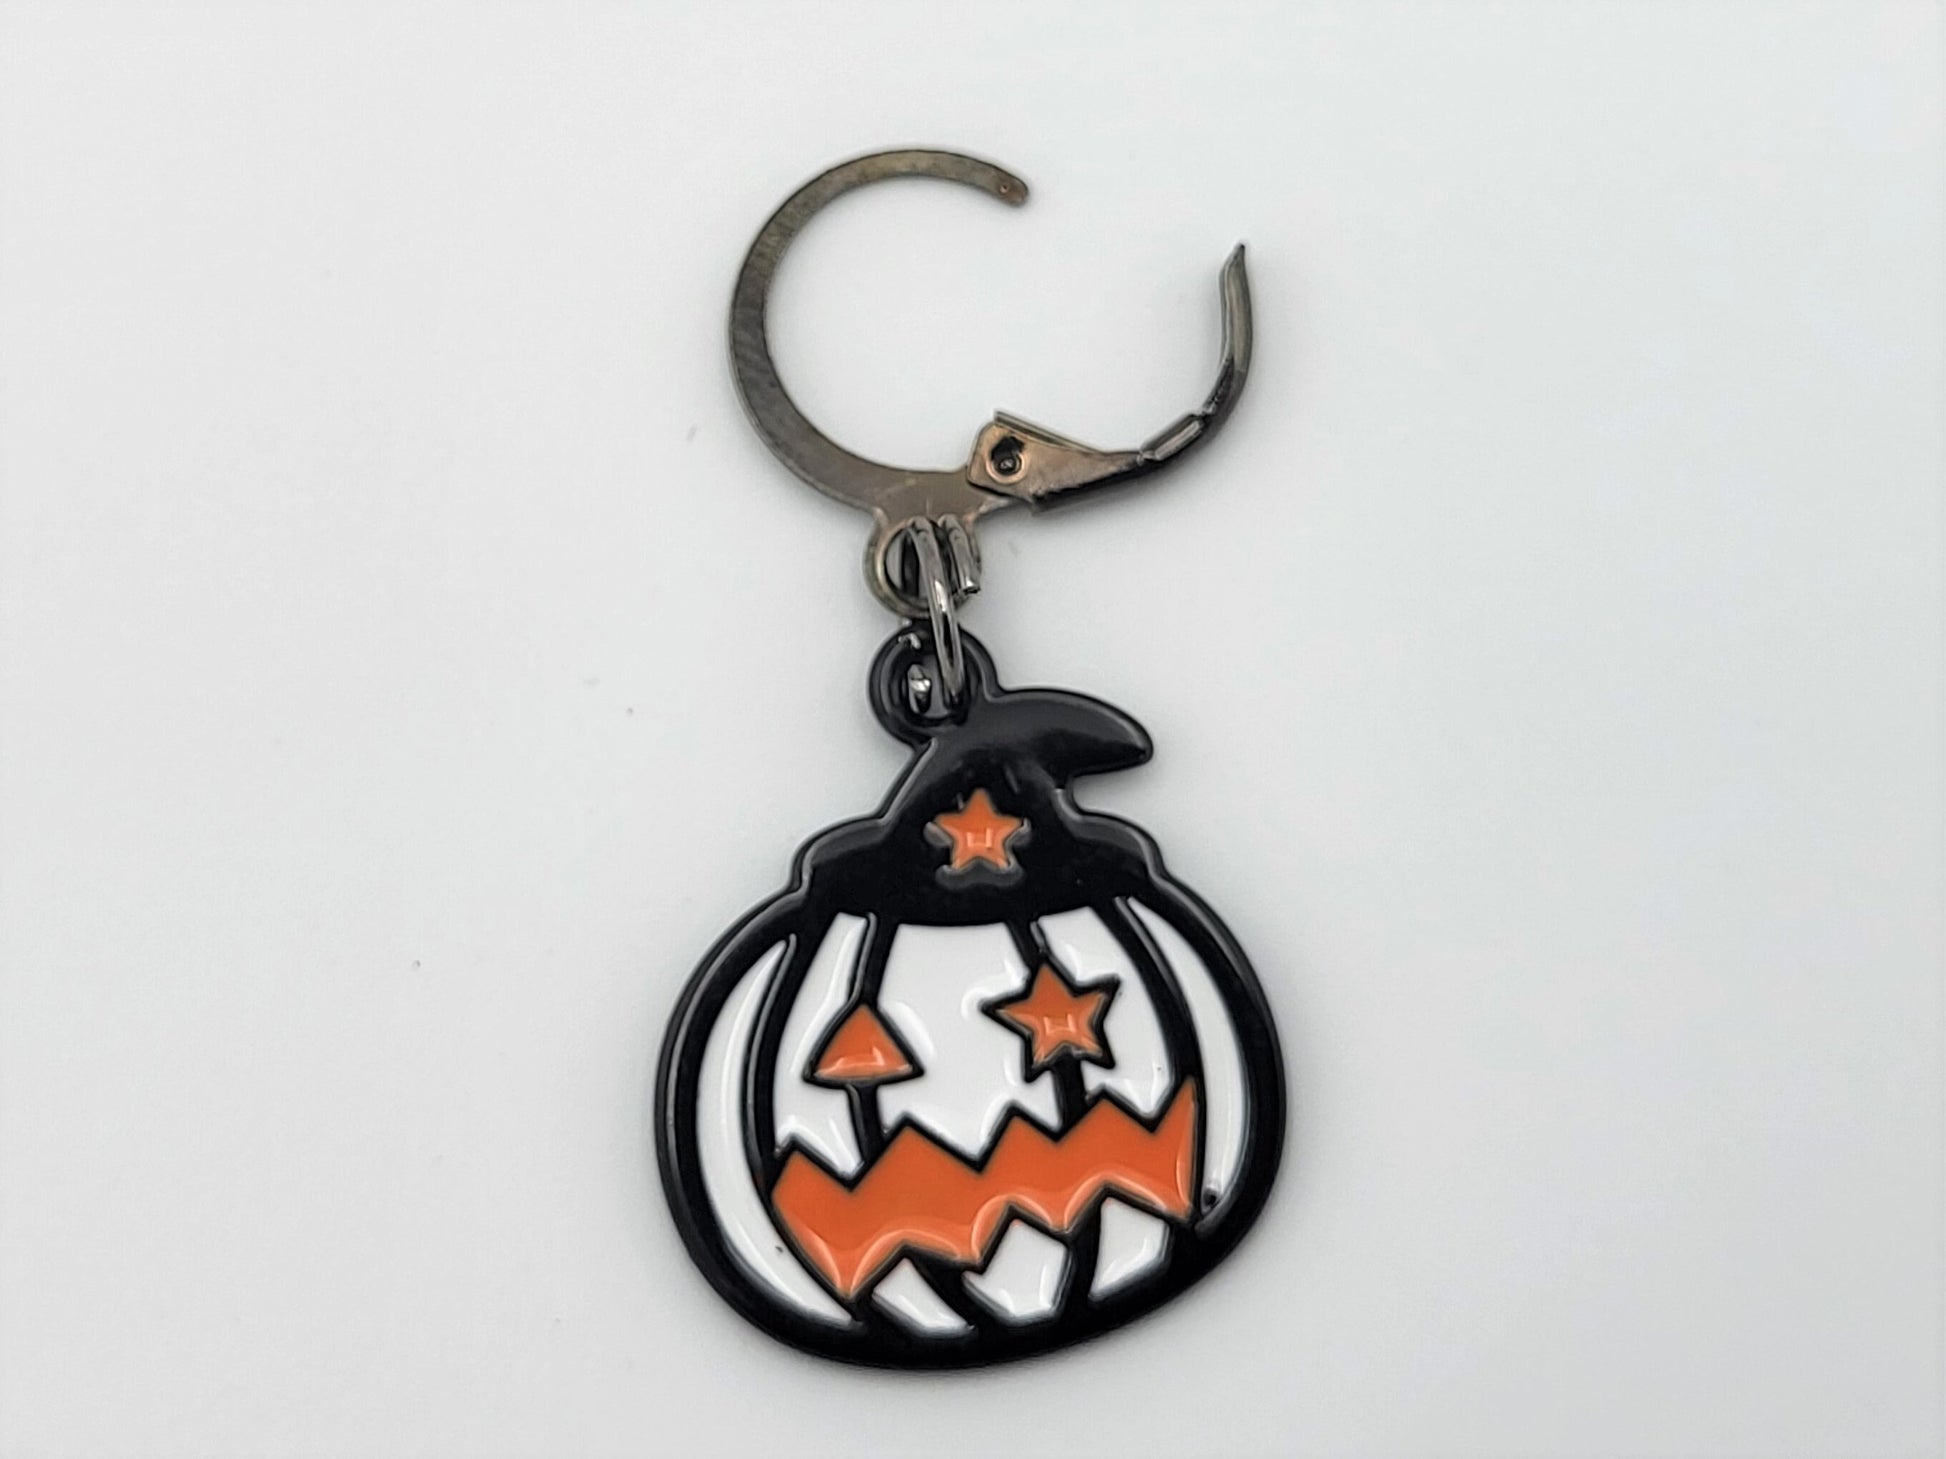 Halloween White Pumpkin Jack O' Lantern Stitch Markers for Knitting 3pc | Crochet stitch marker, project bag charm, crochet accessory